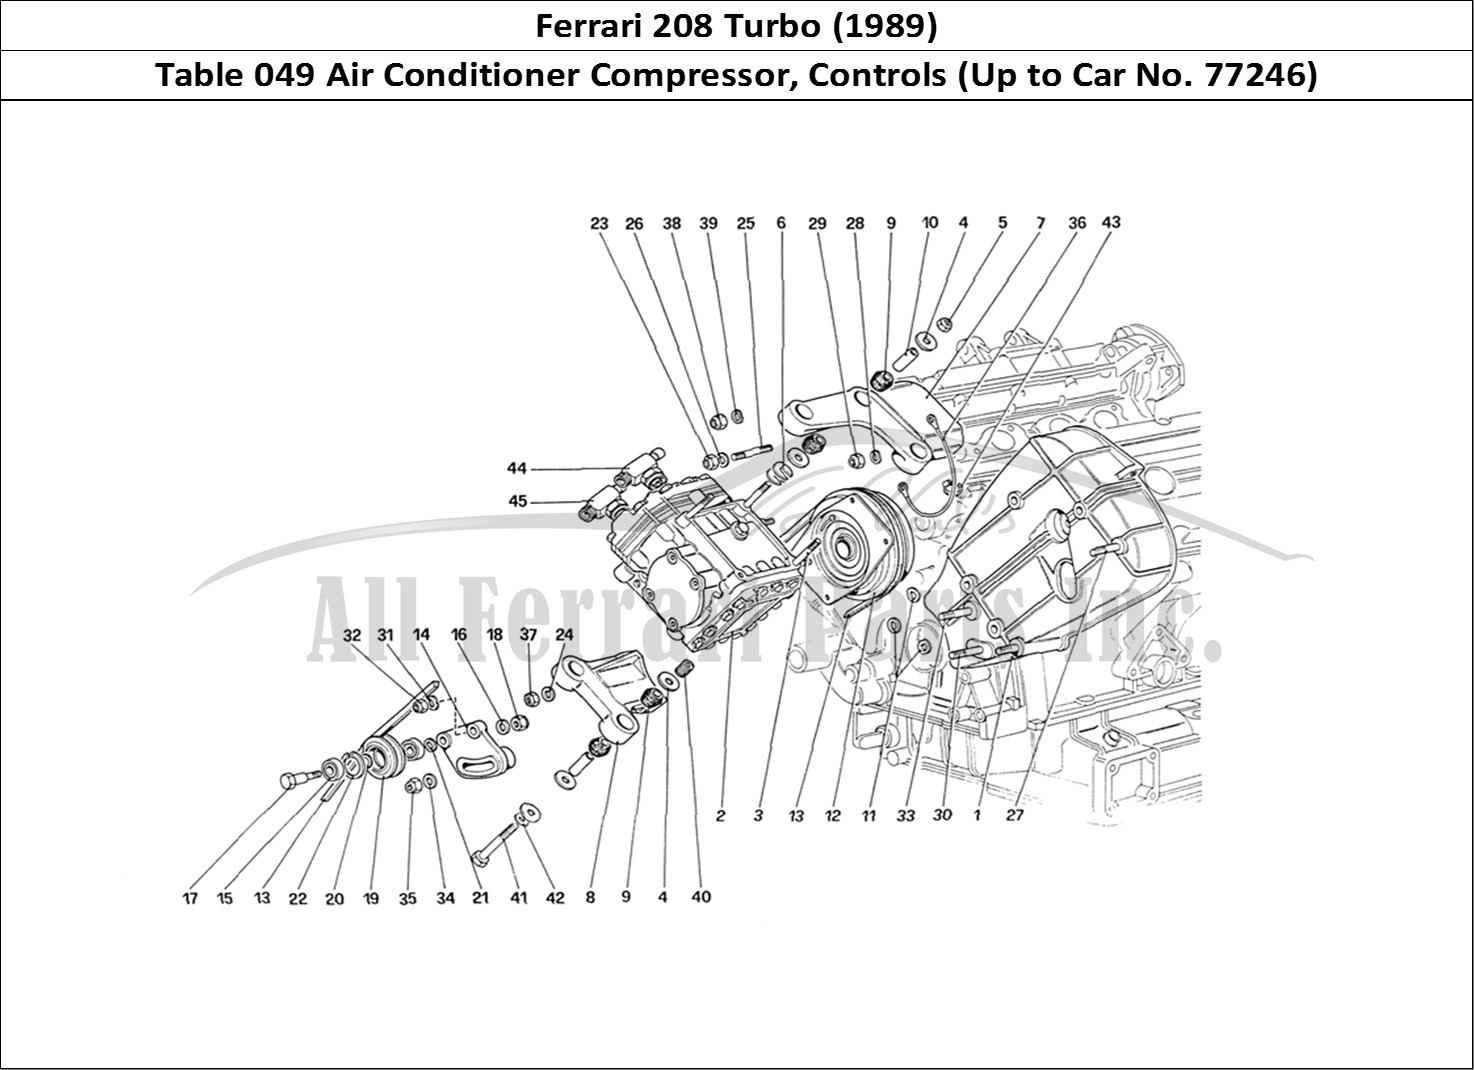 Ferrari Parts Ferrari 208 Turbo (1989) Page 049 Air Conditioning Compress